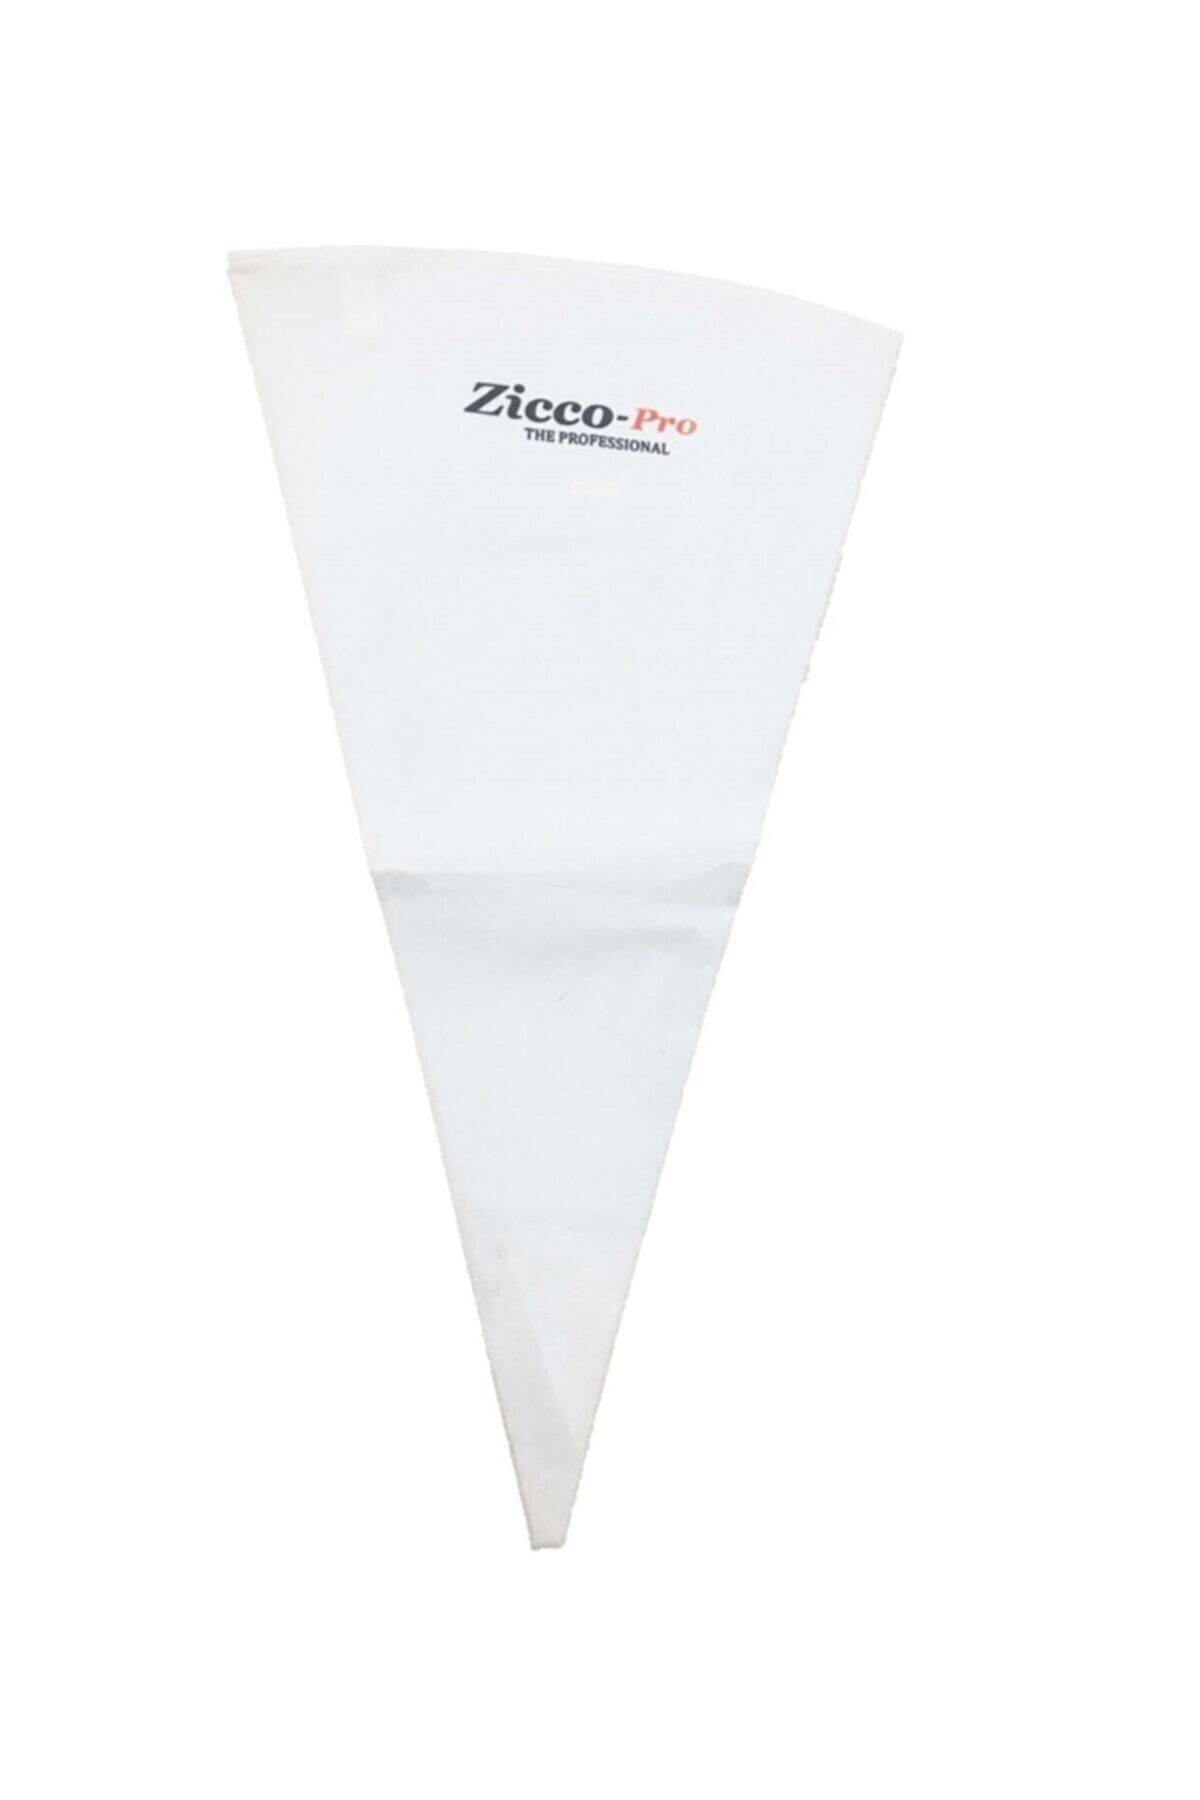 Zicco Zc-53 Krema Torbası Bez Krema Sıkma Torba-55 Cm